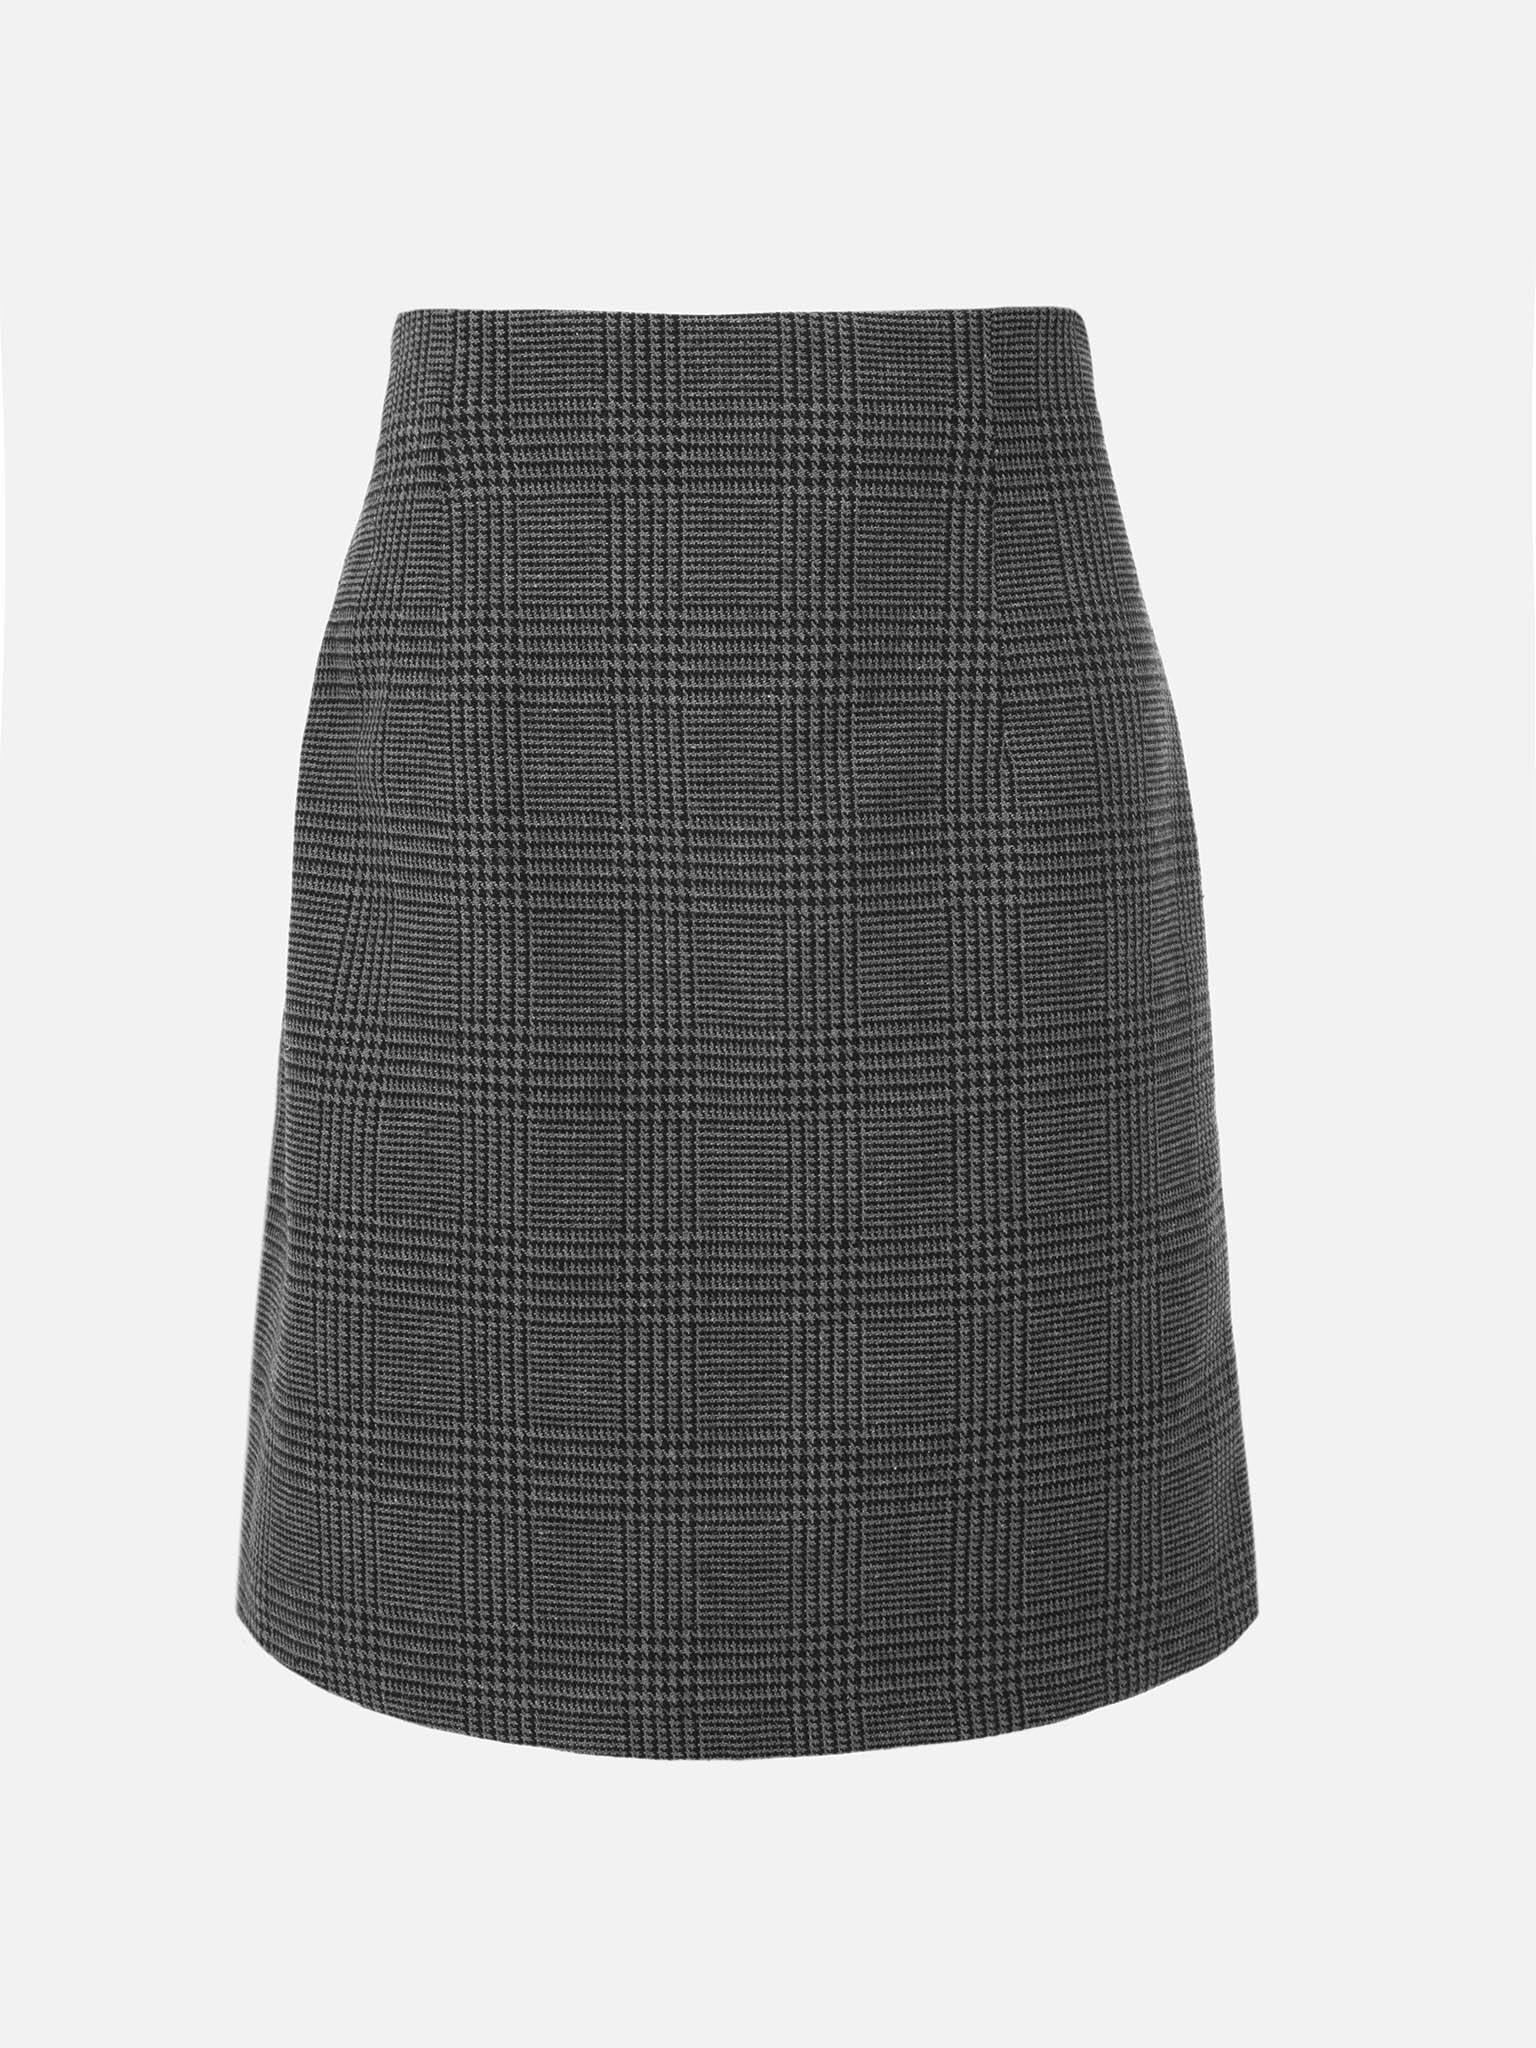 Checked A-line mini skirt :: LICHI - Online fashion store